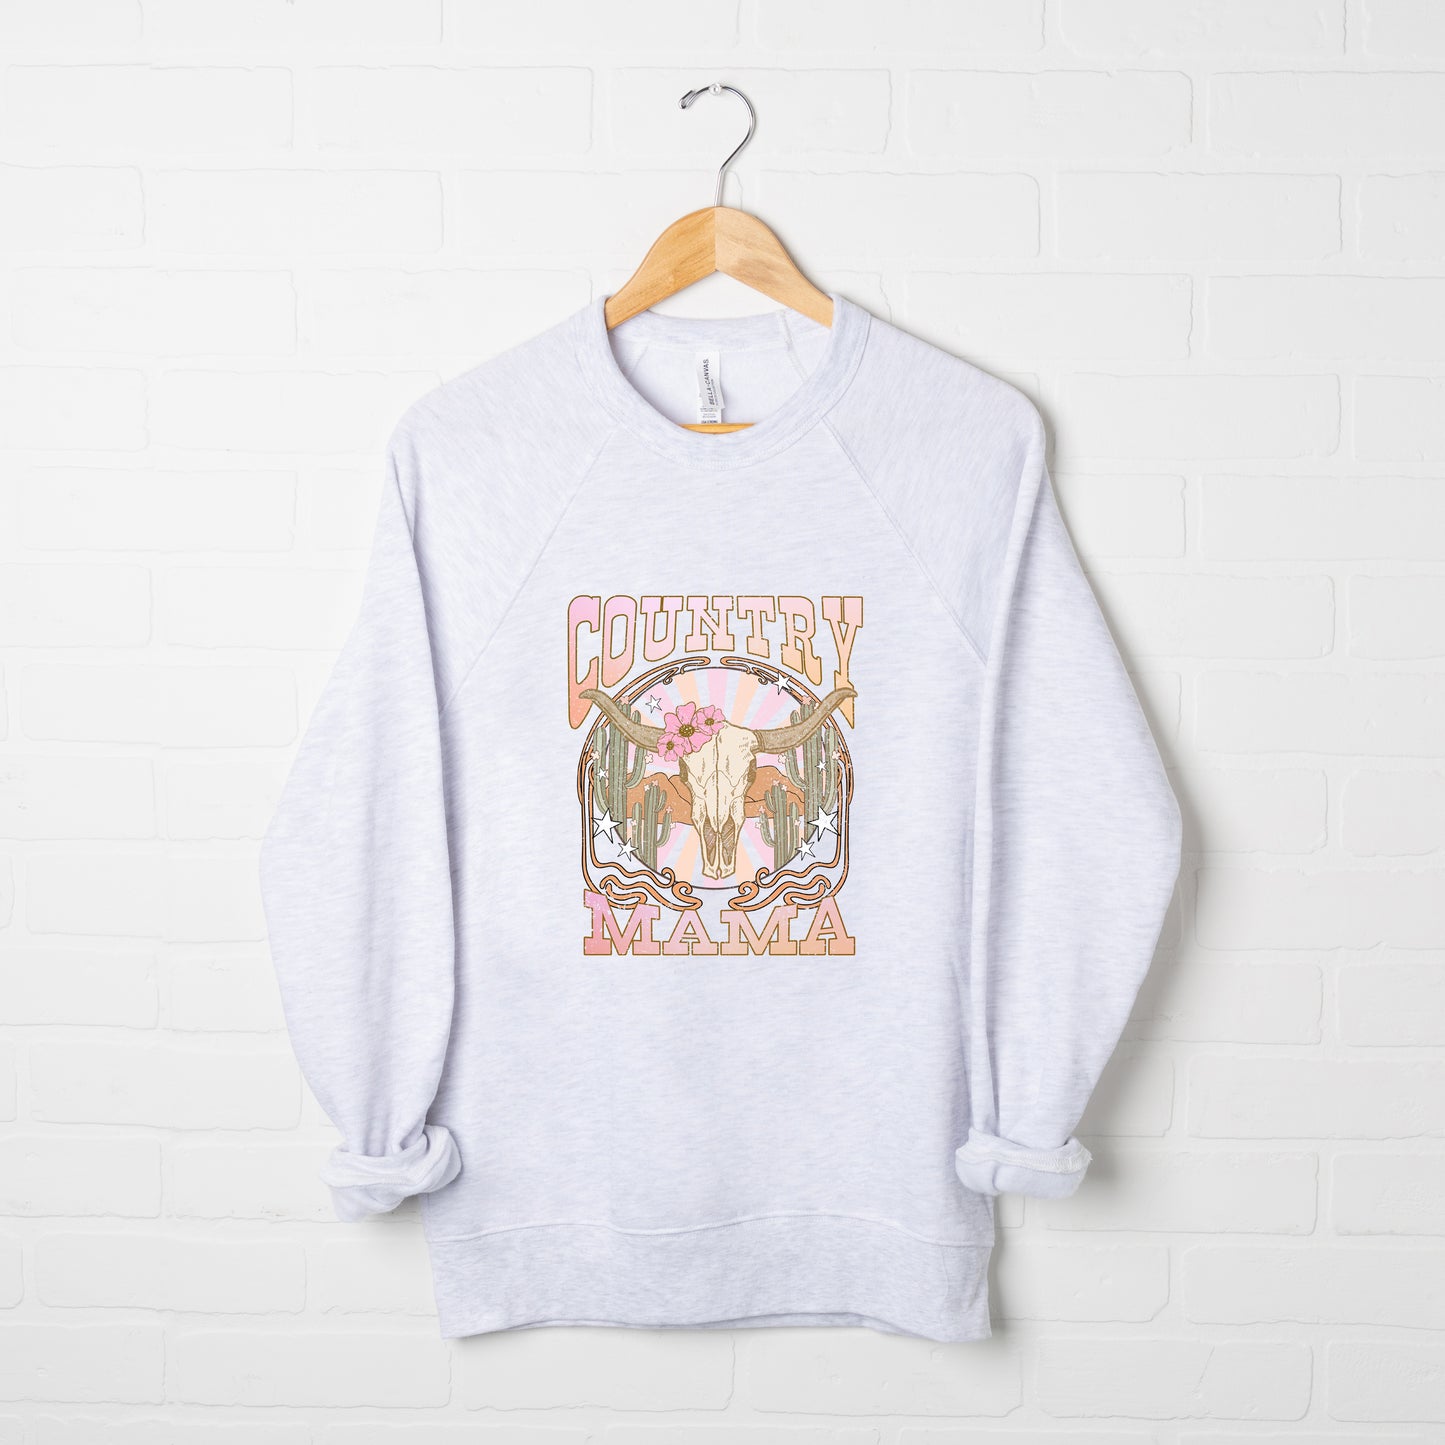 Country Mama Grunge | Bella Canvas Sweatshirt